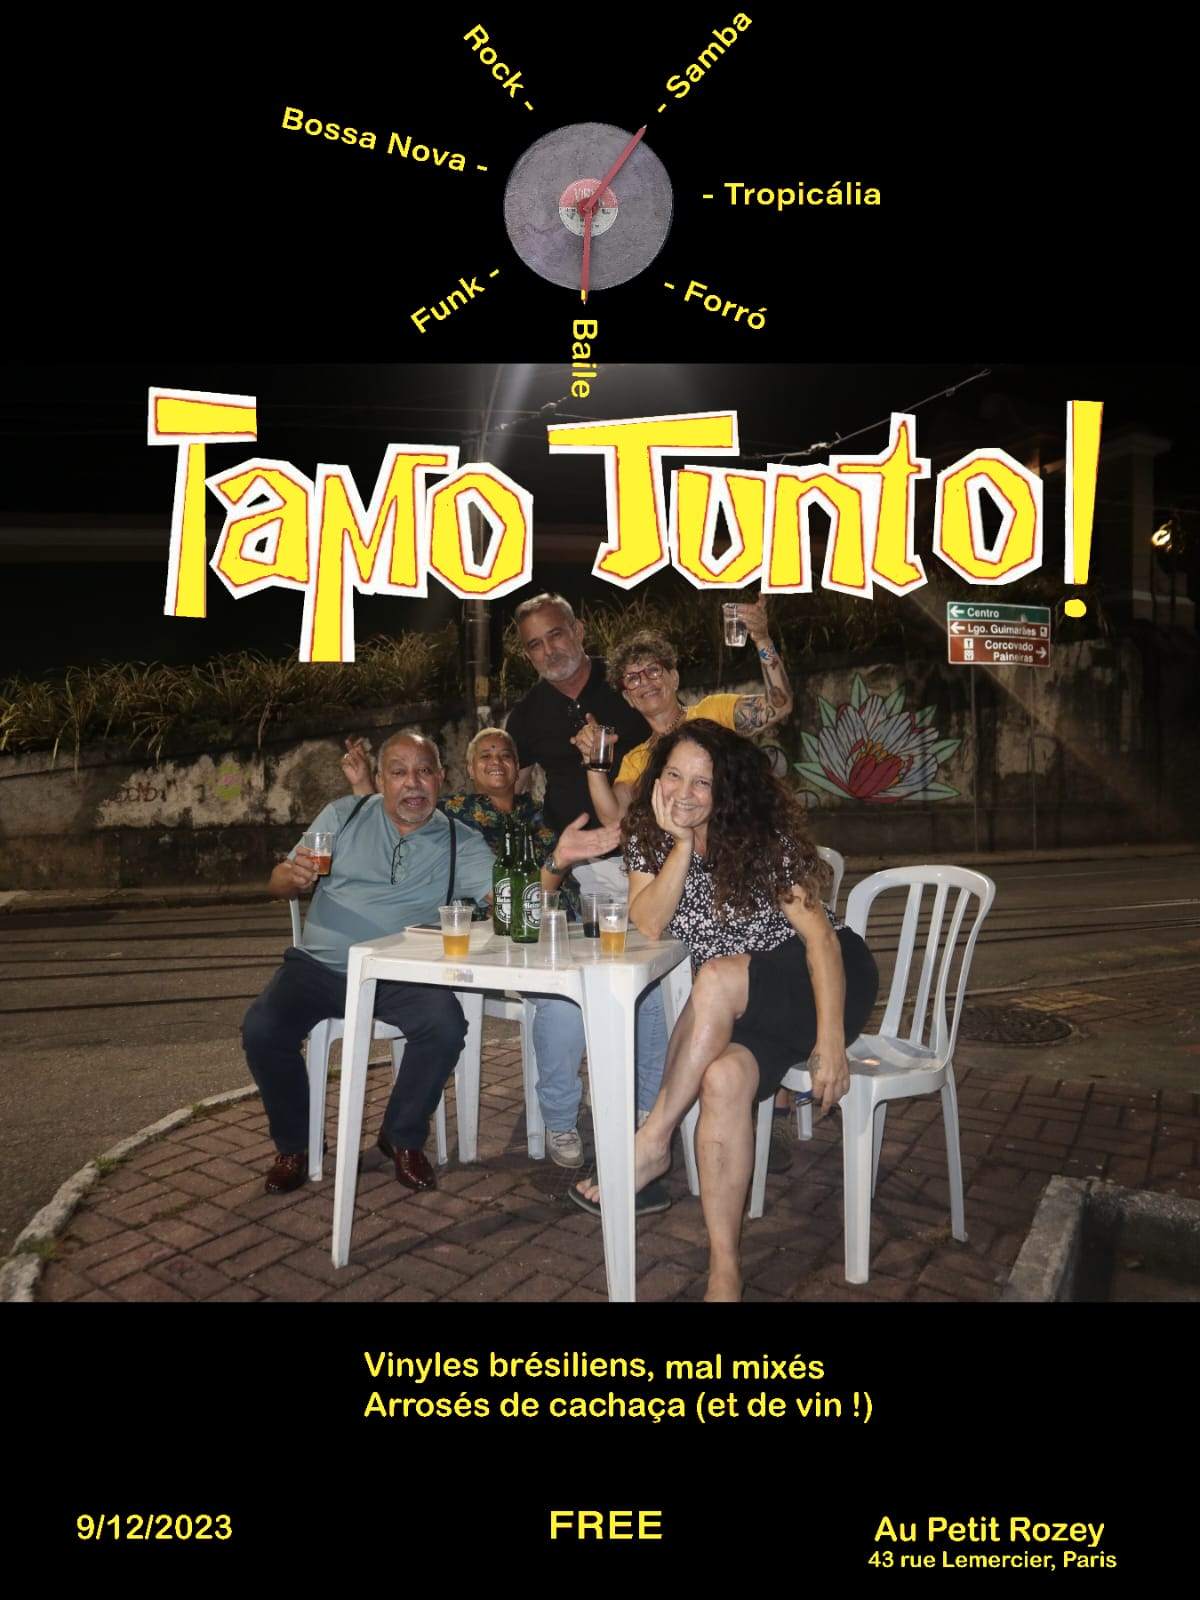 Tamo Junto! (Brazilian vinyl, mixed badly) - フライヤー表